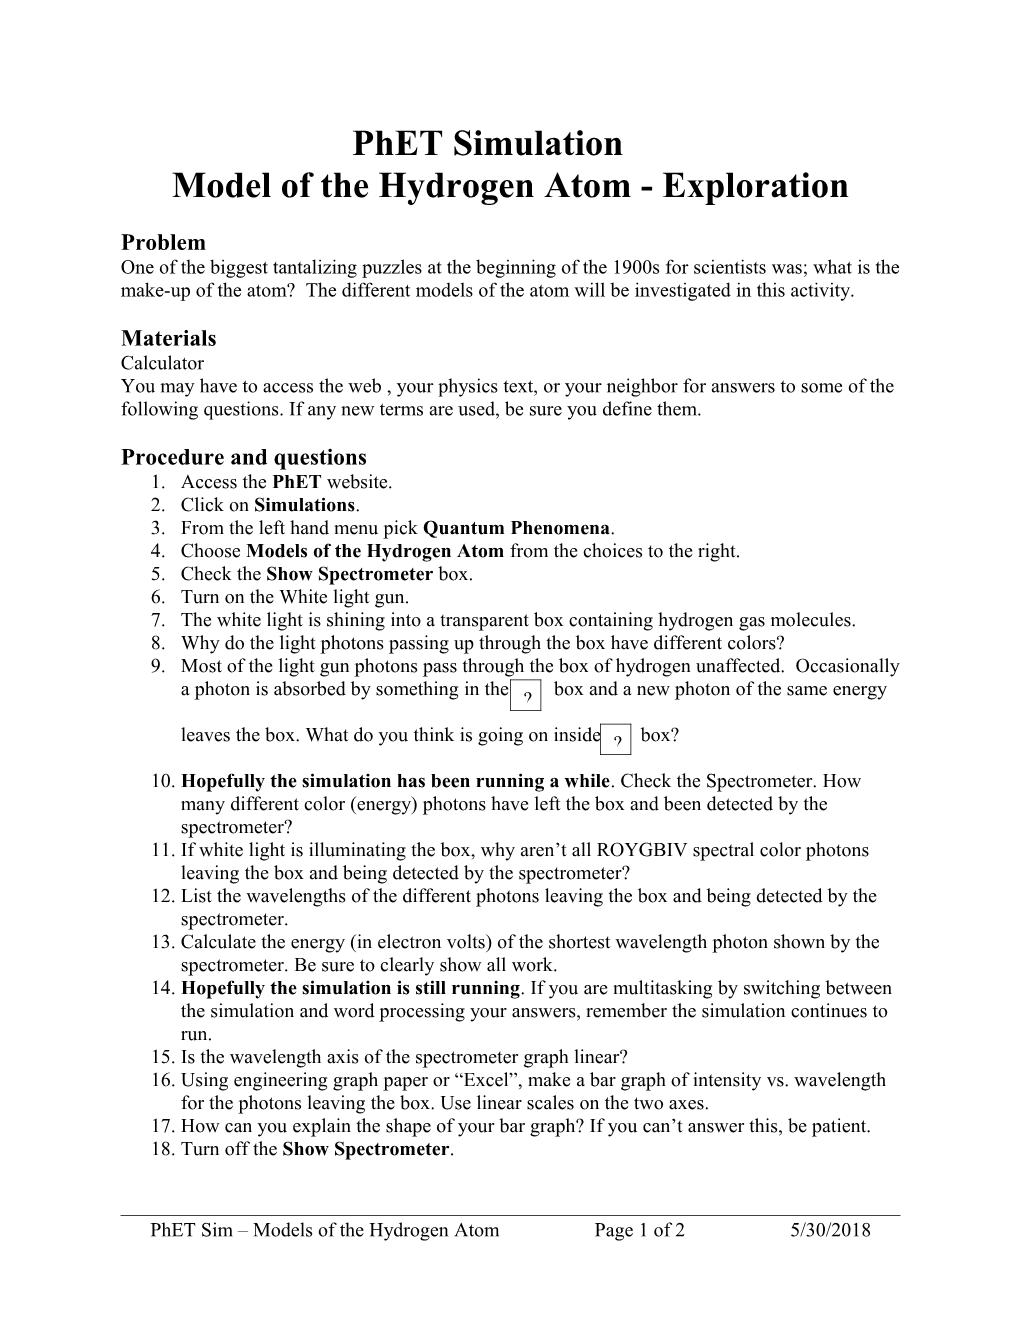 Model of the Hydrogen Atom - Exploration